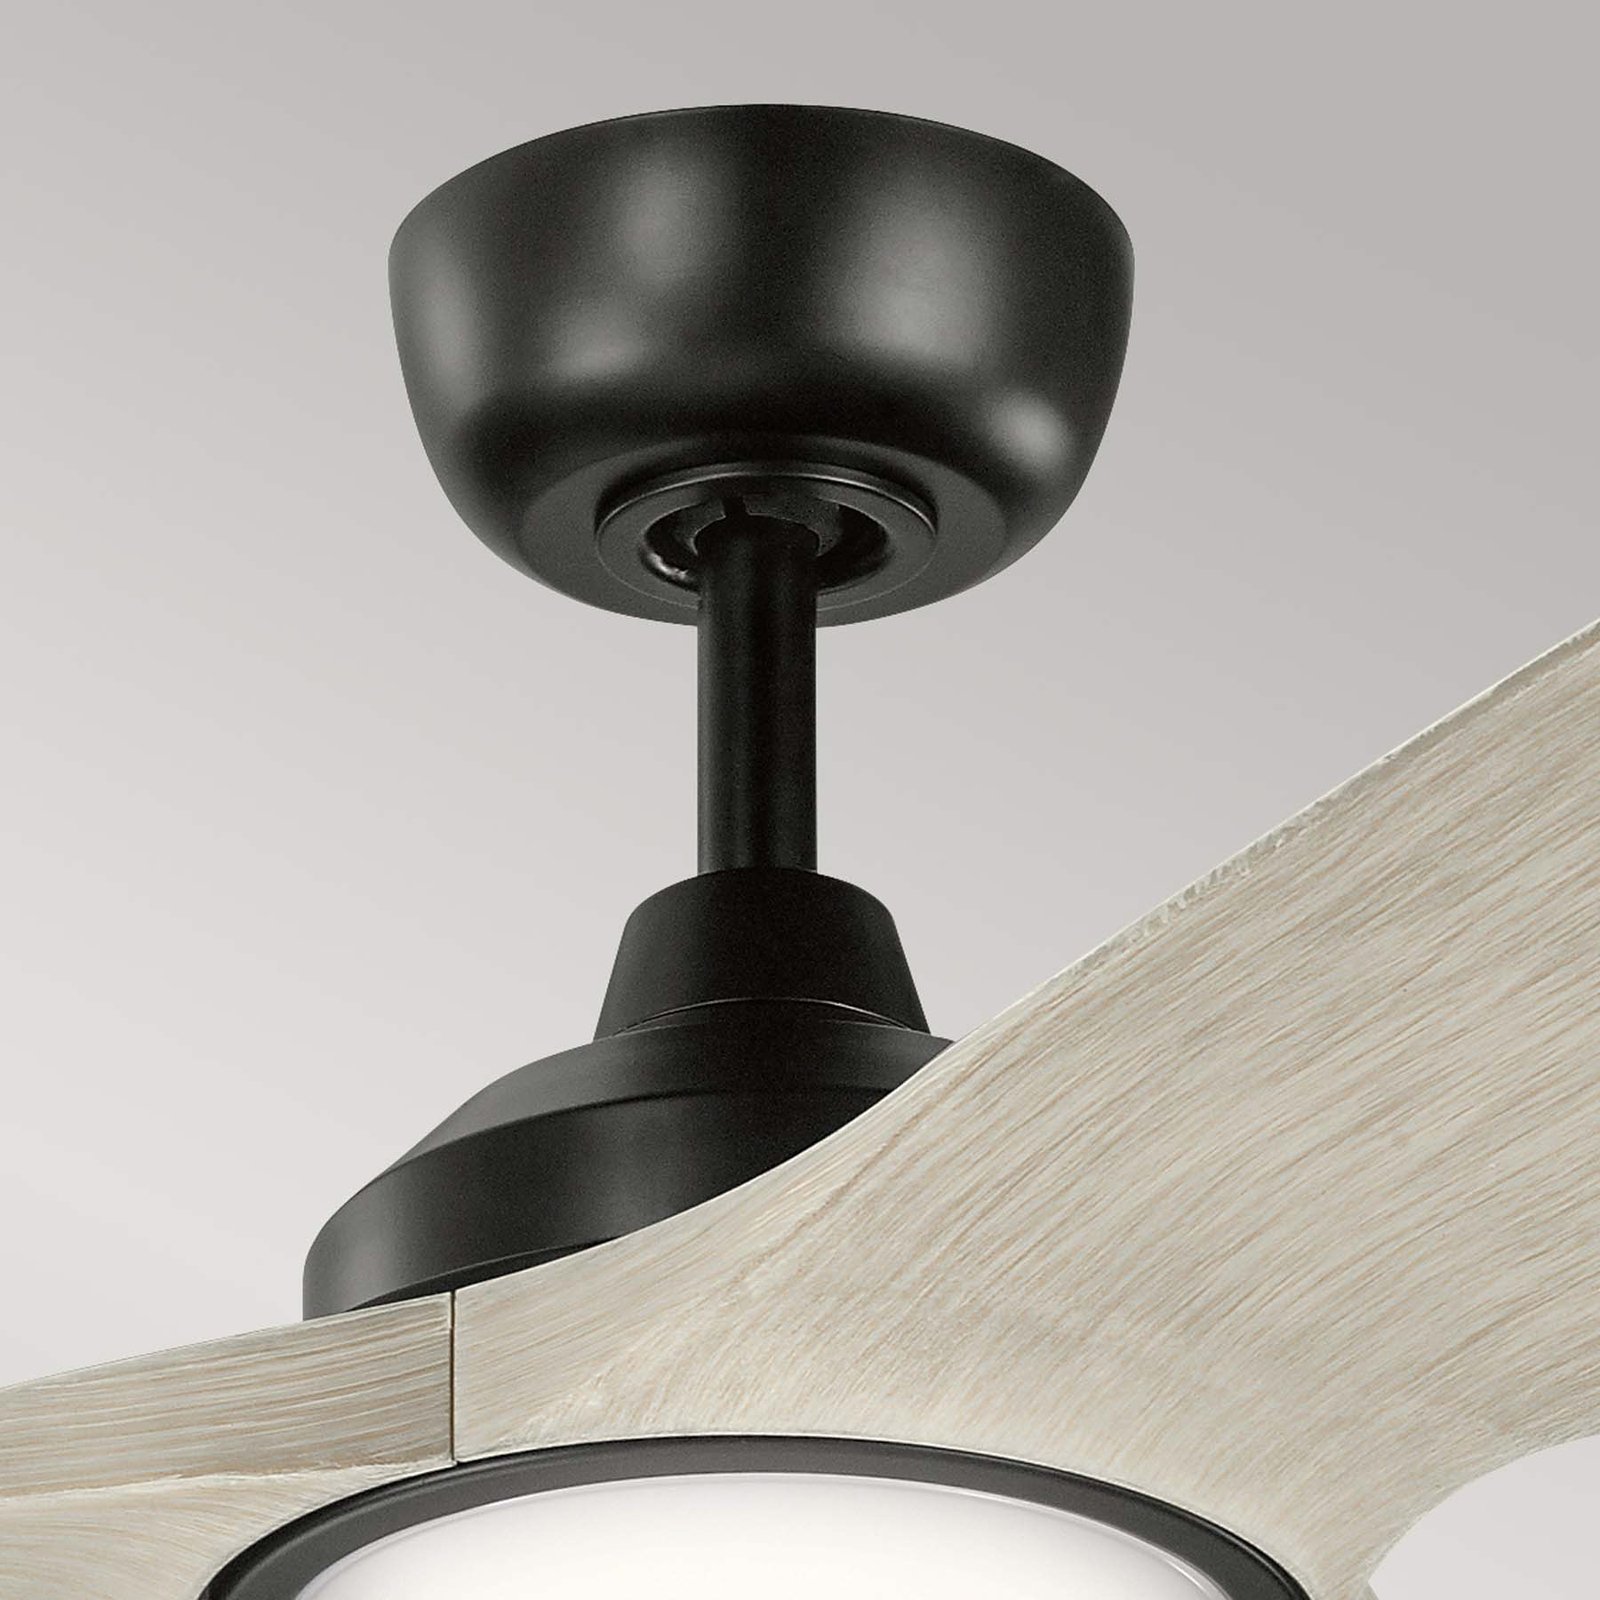 Imari LED ceiling fan, three-blade